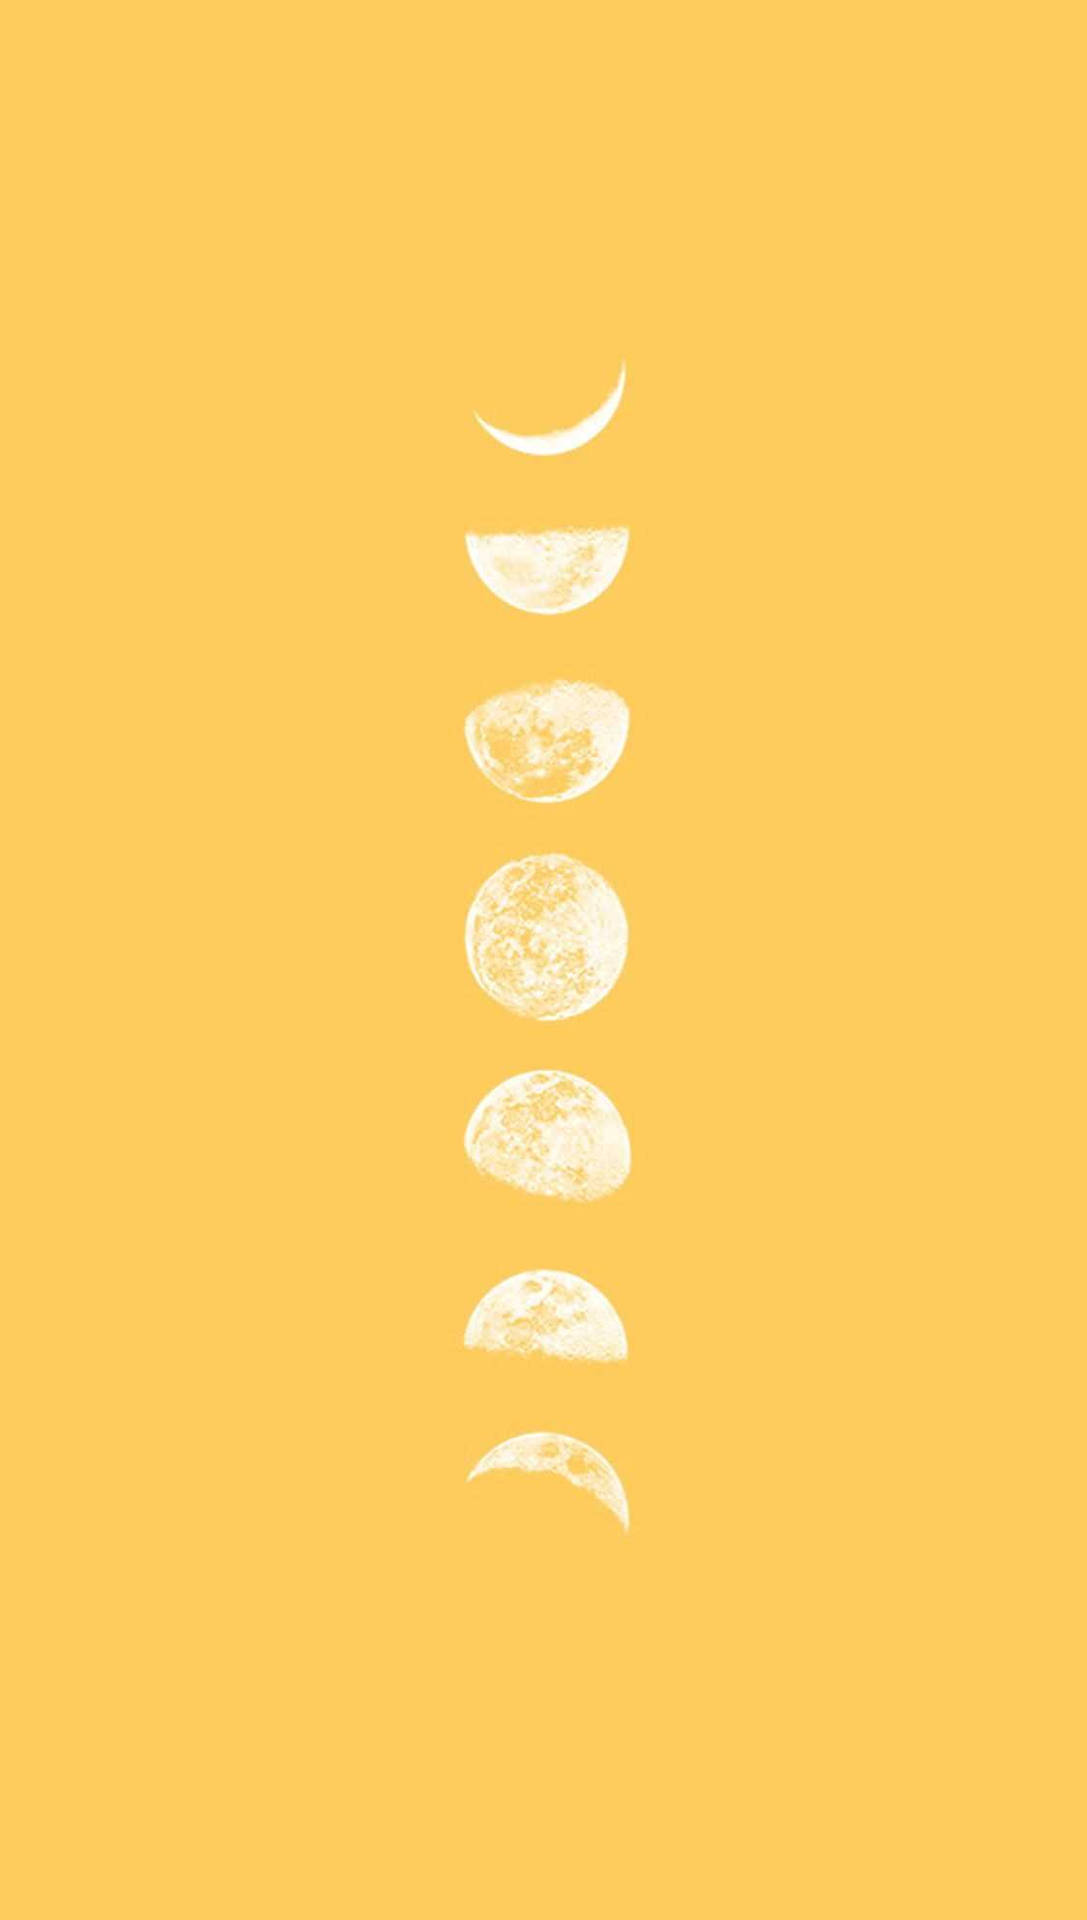 Moon Phase Pastel Yellow Aesthetic Wallpaper